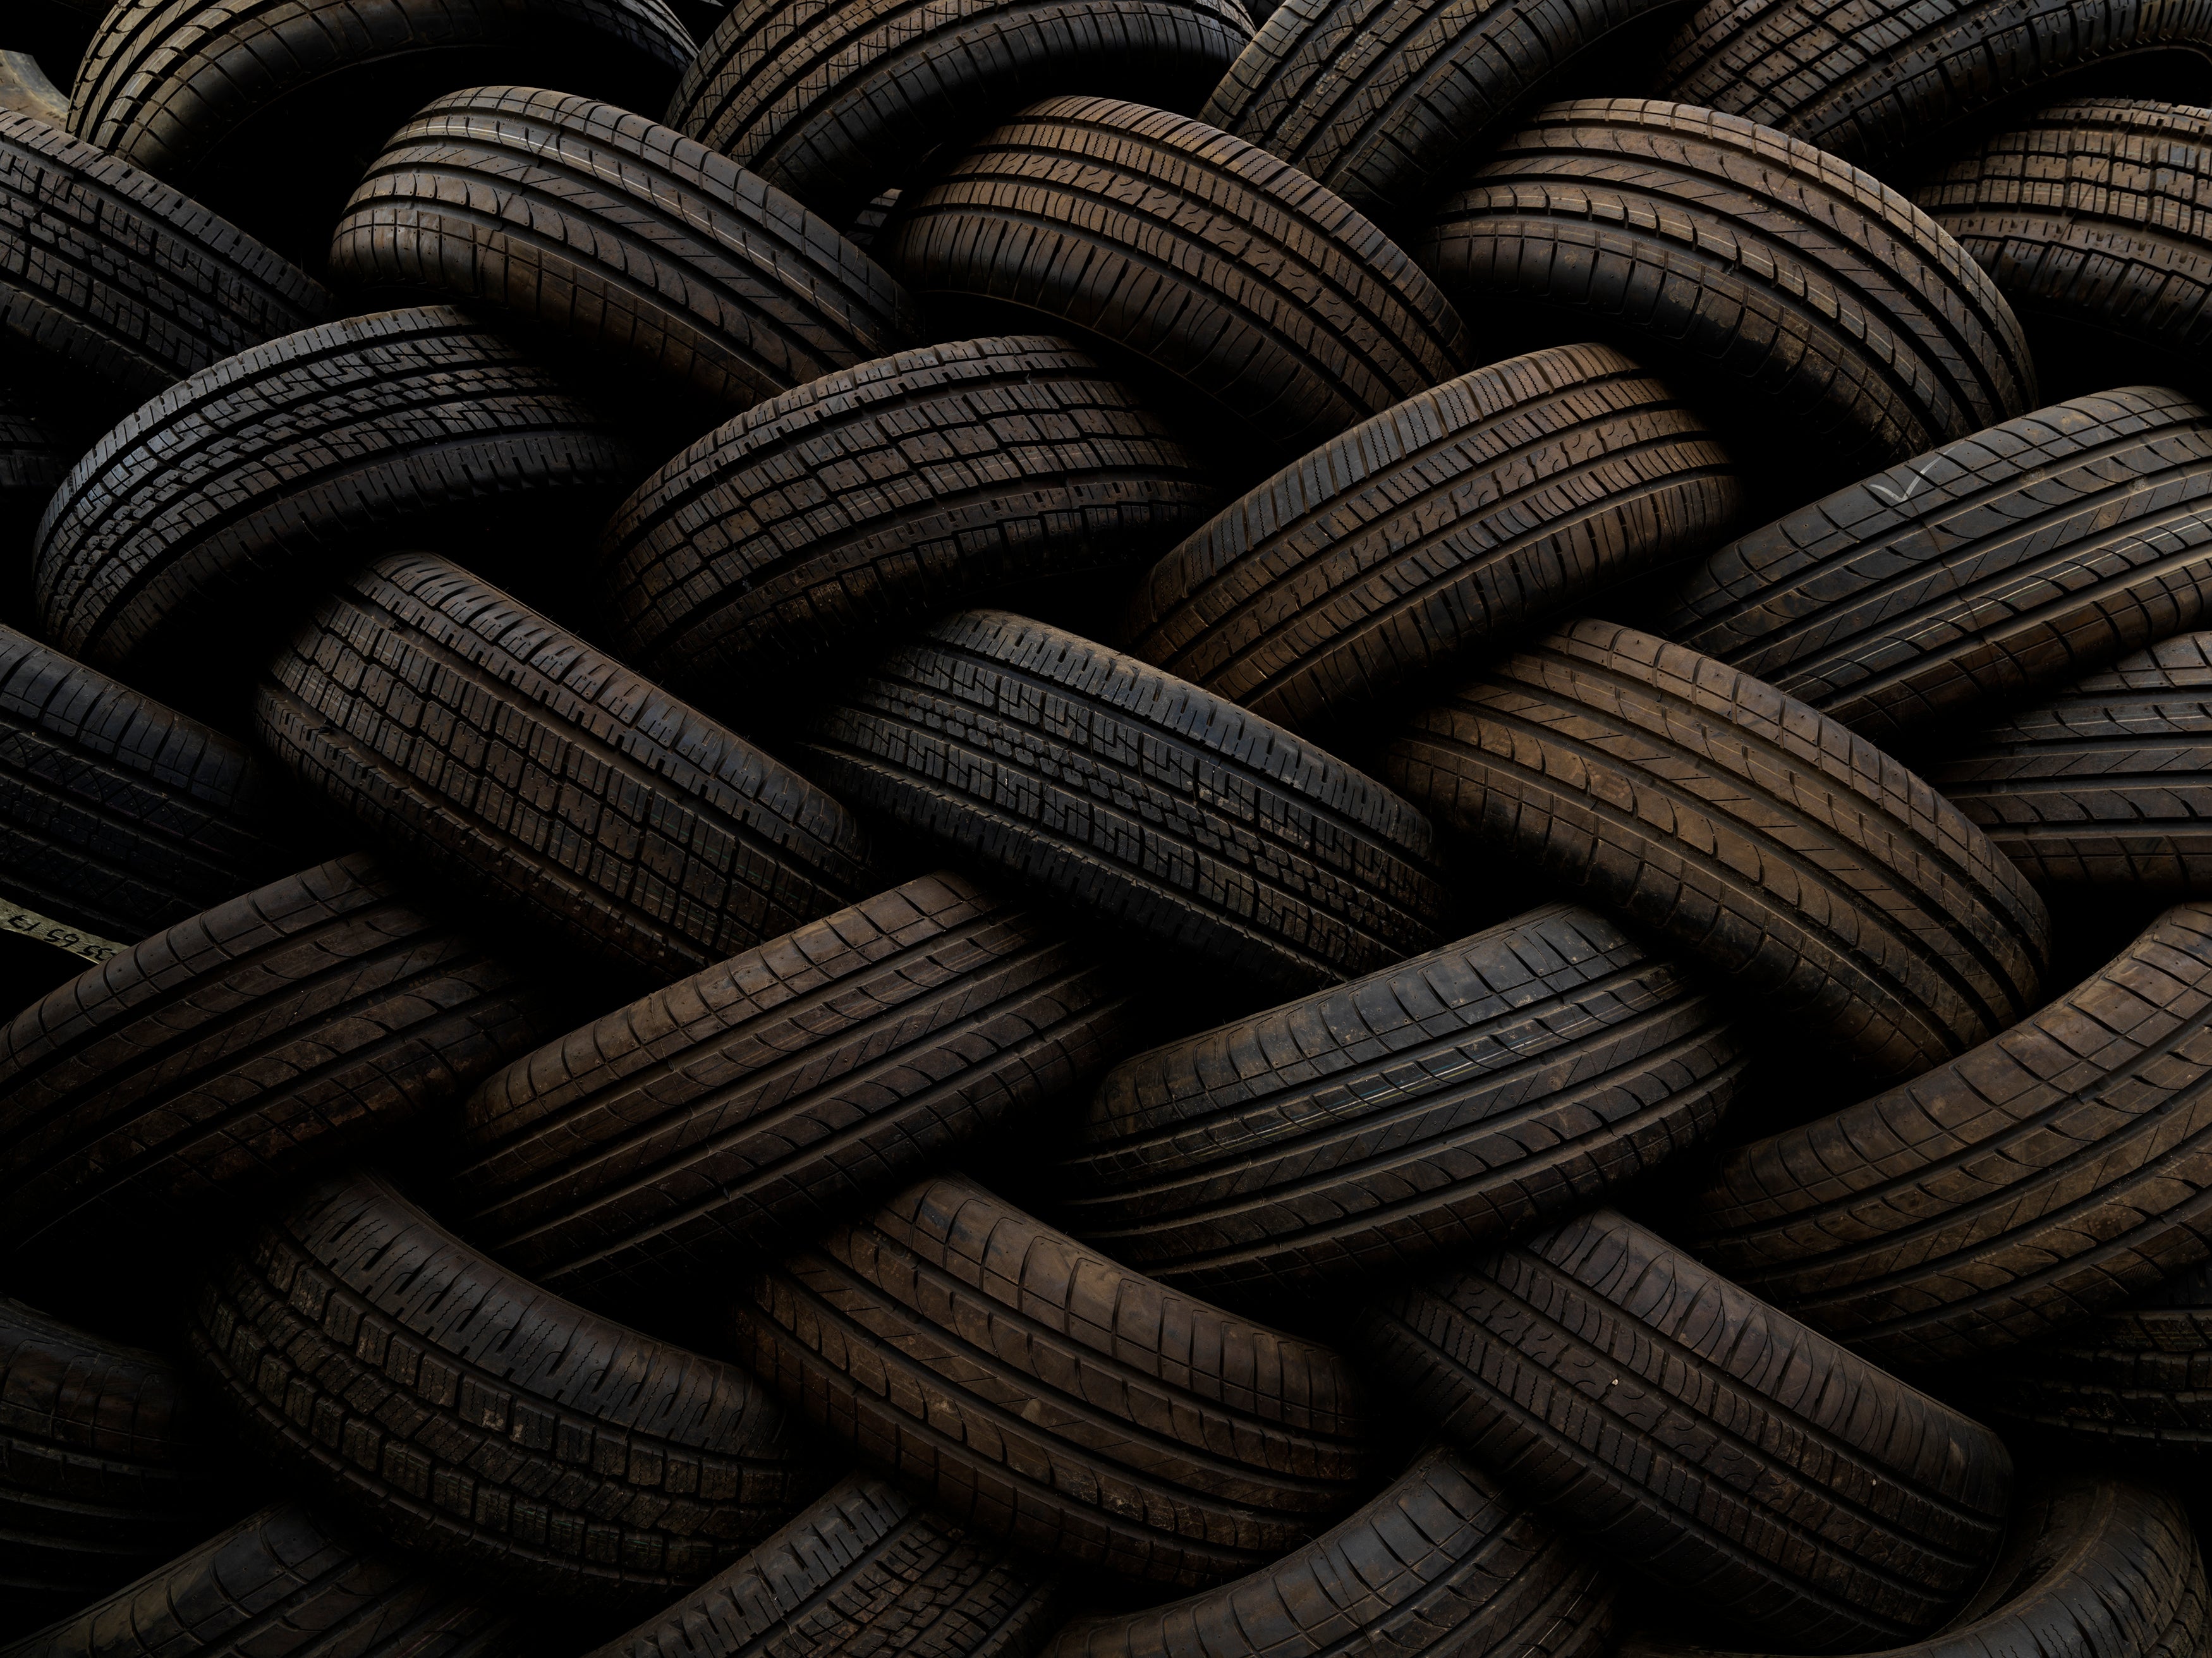 Tires 01 by Jalal Bin Thaneya